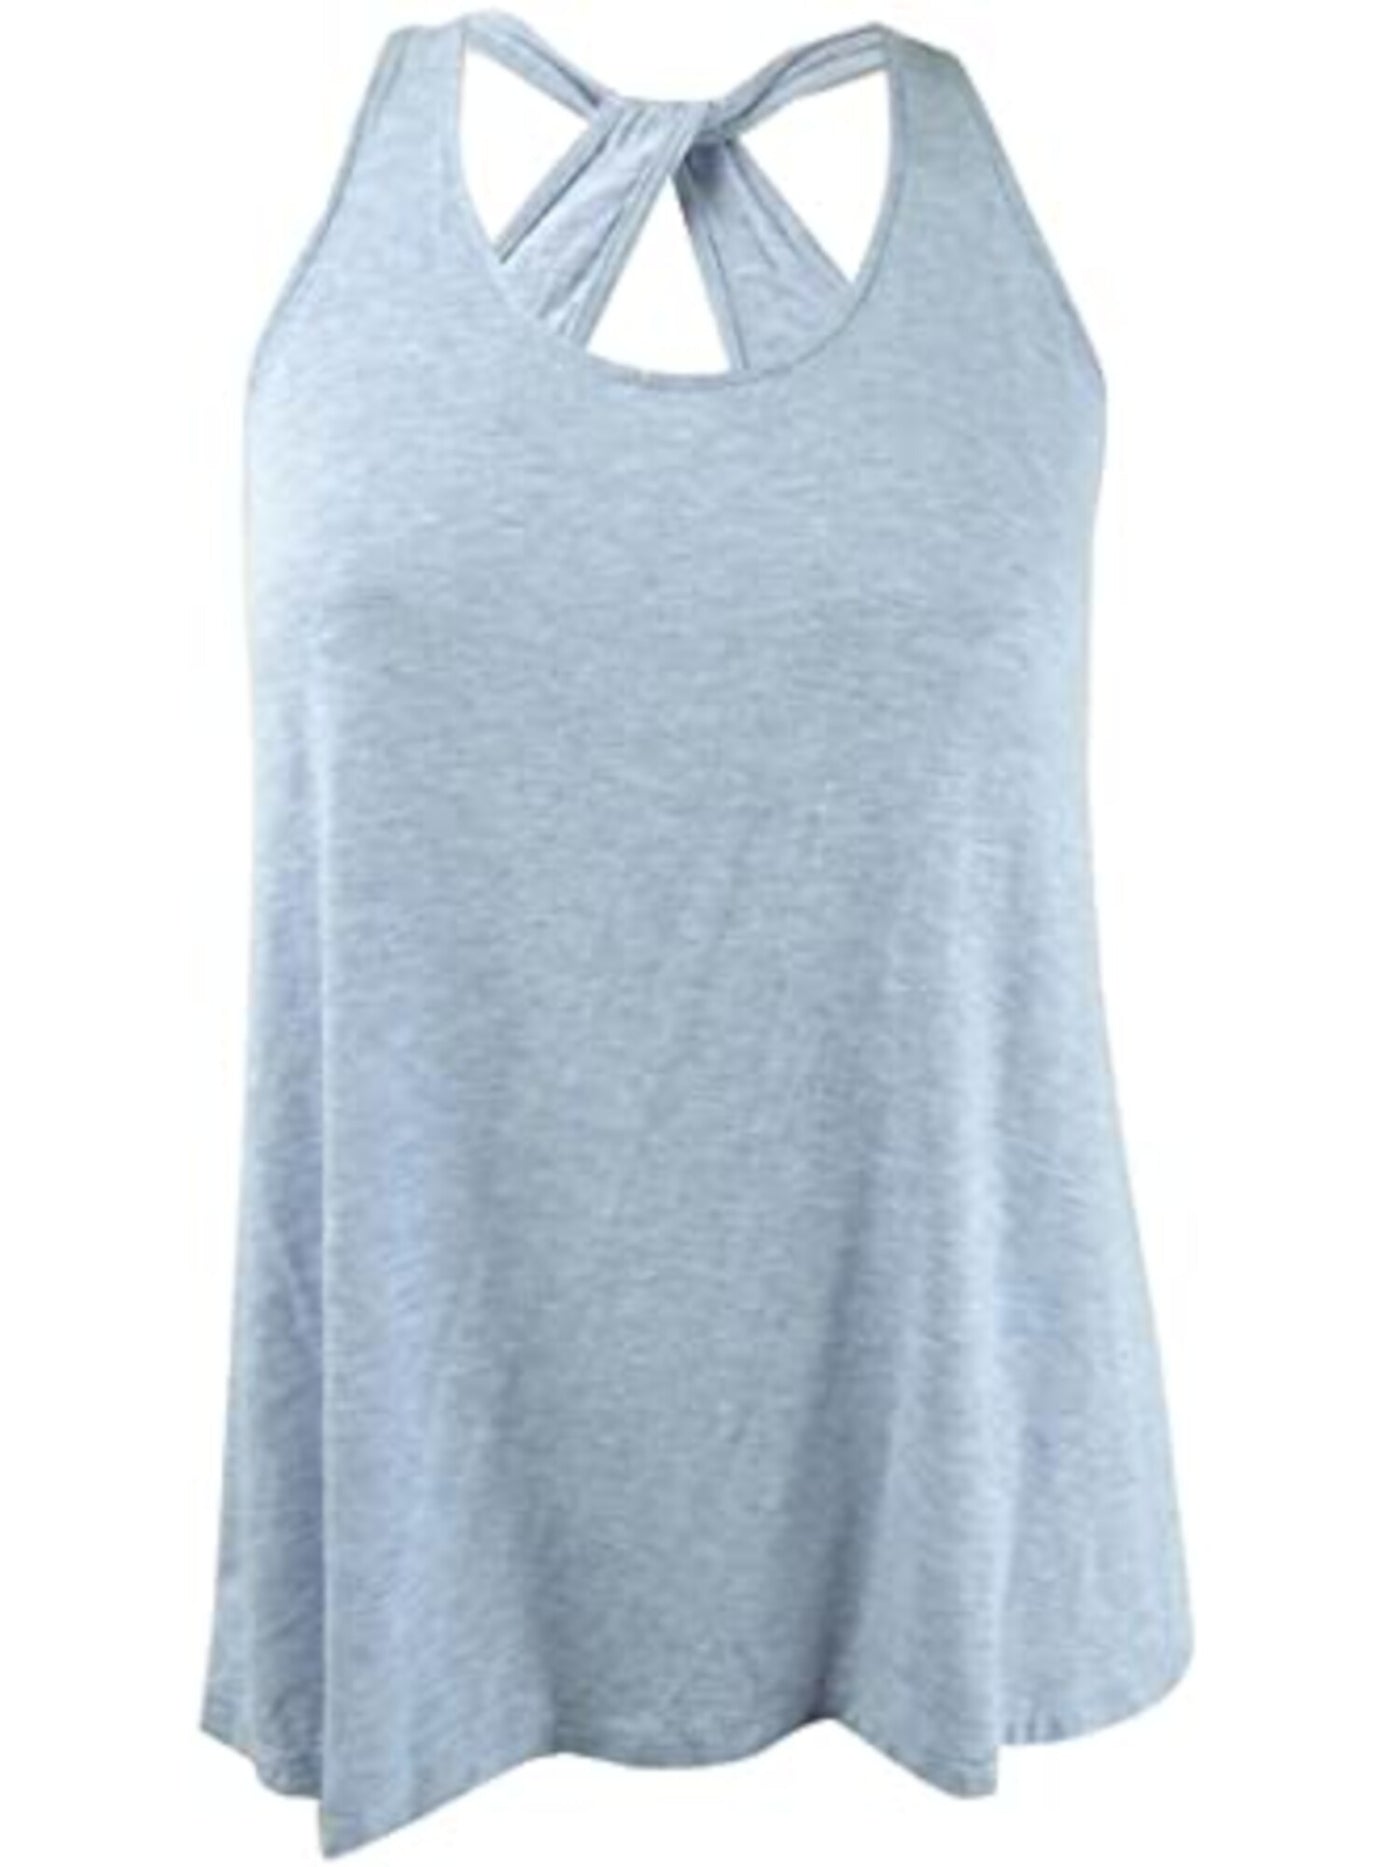 ALFANI Intimates Gray Rayon Everyday Shirt Size: XL